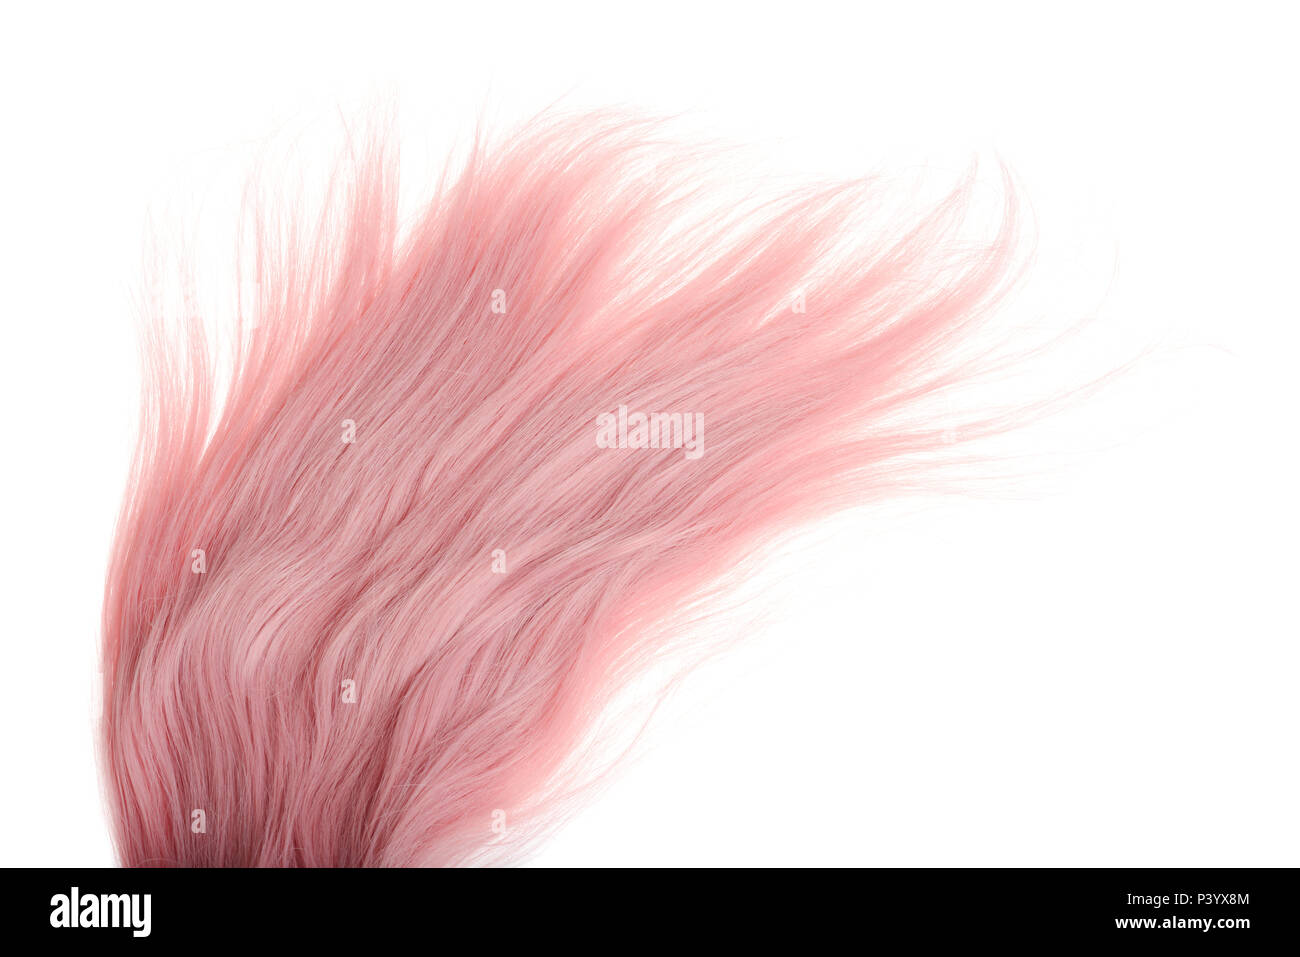 Closeup trefolo di capelli rosa Foto Stock